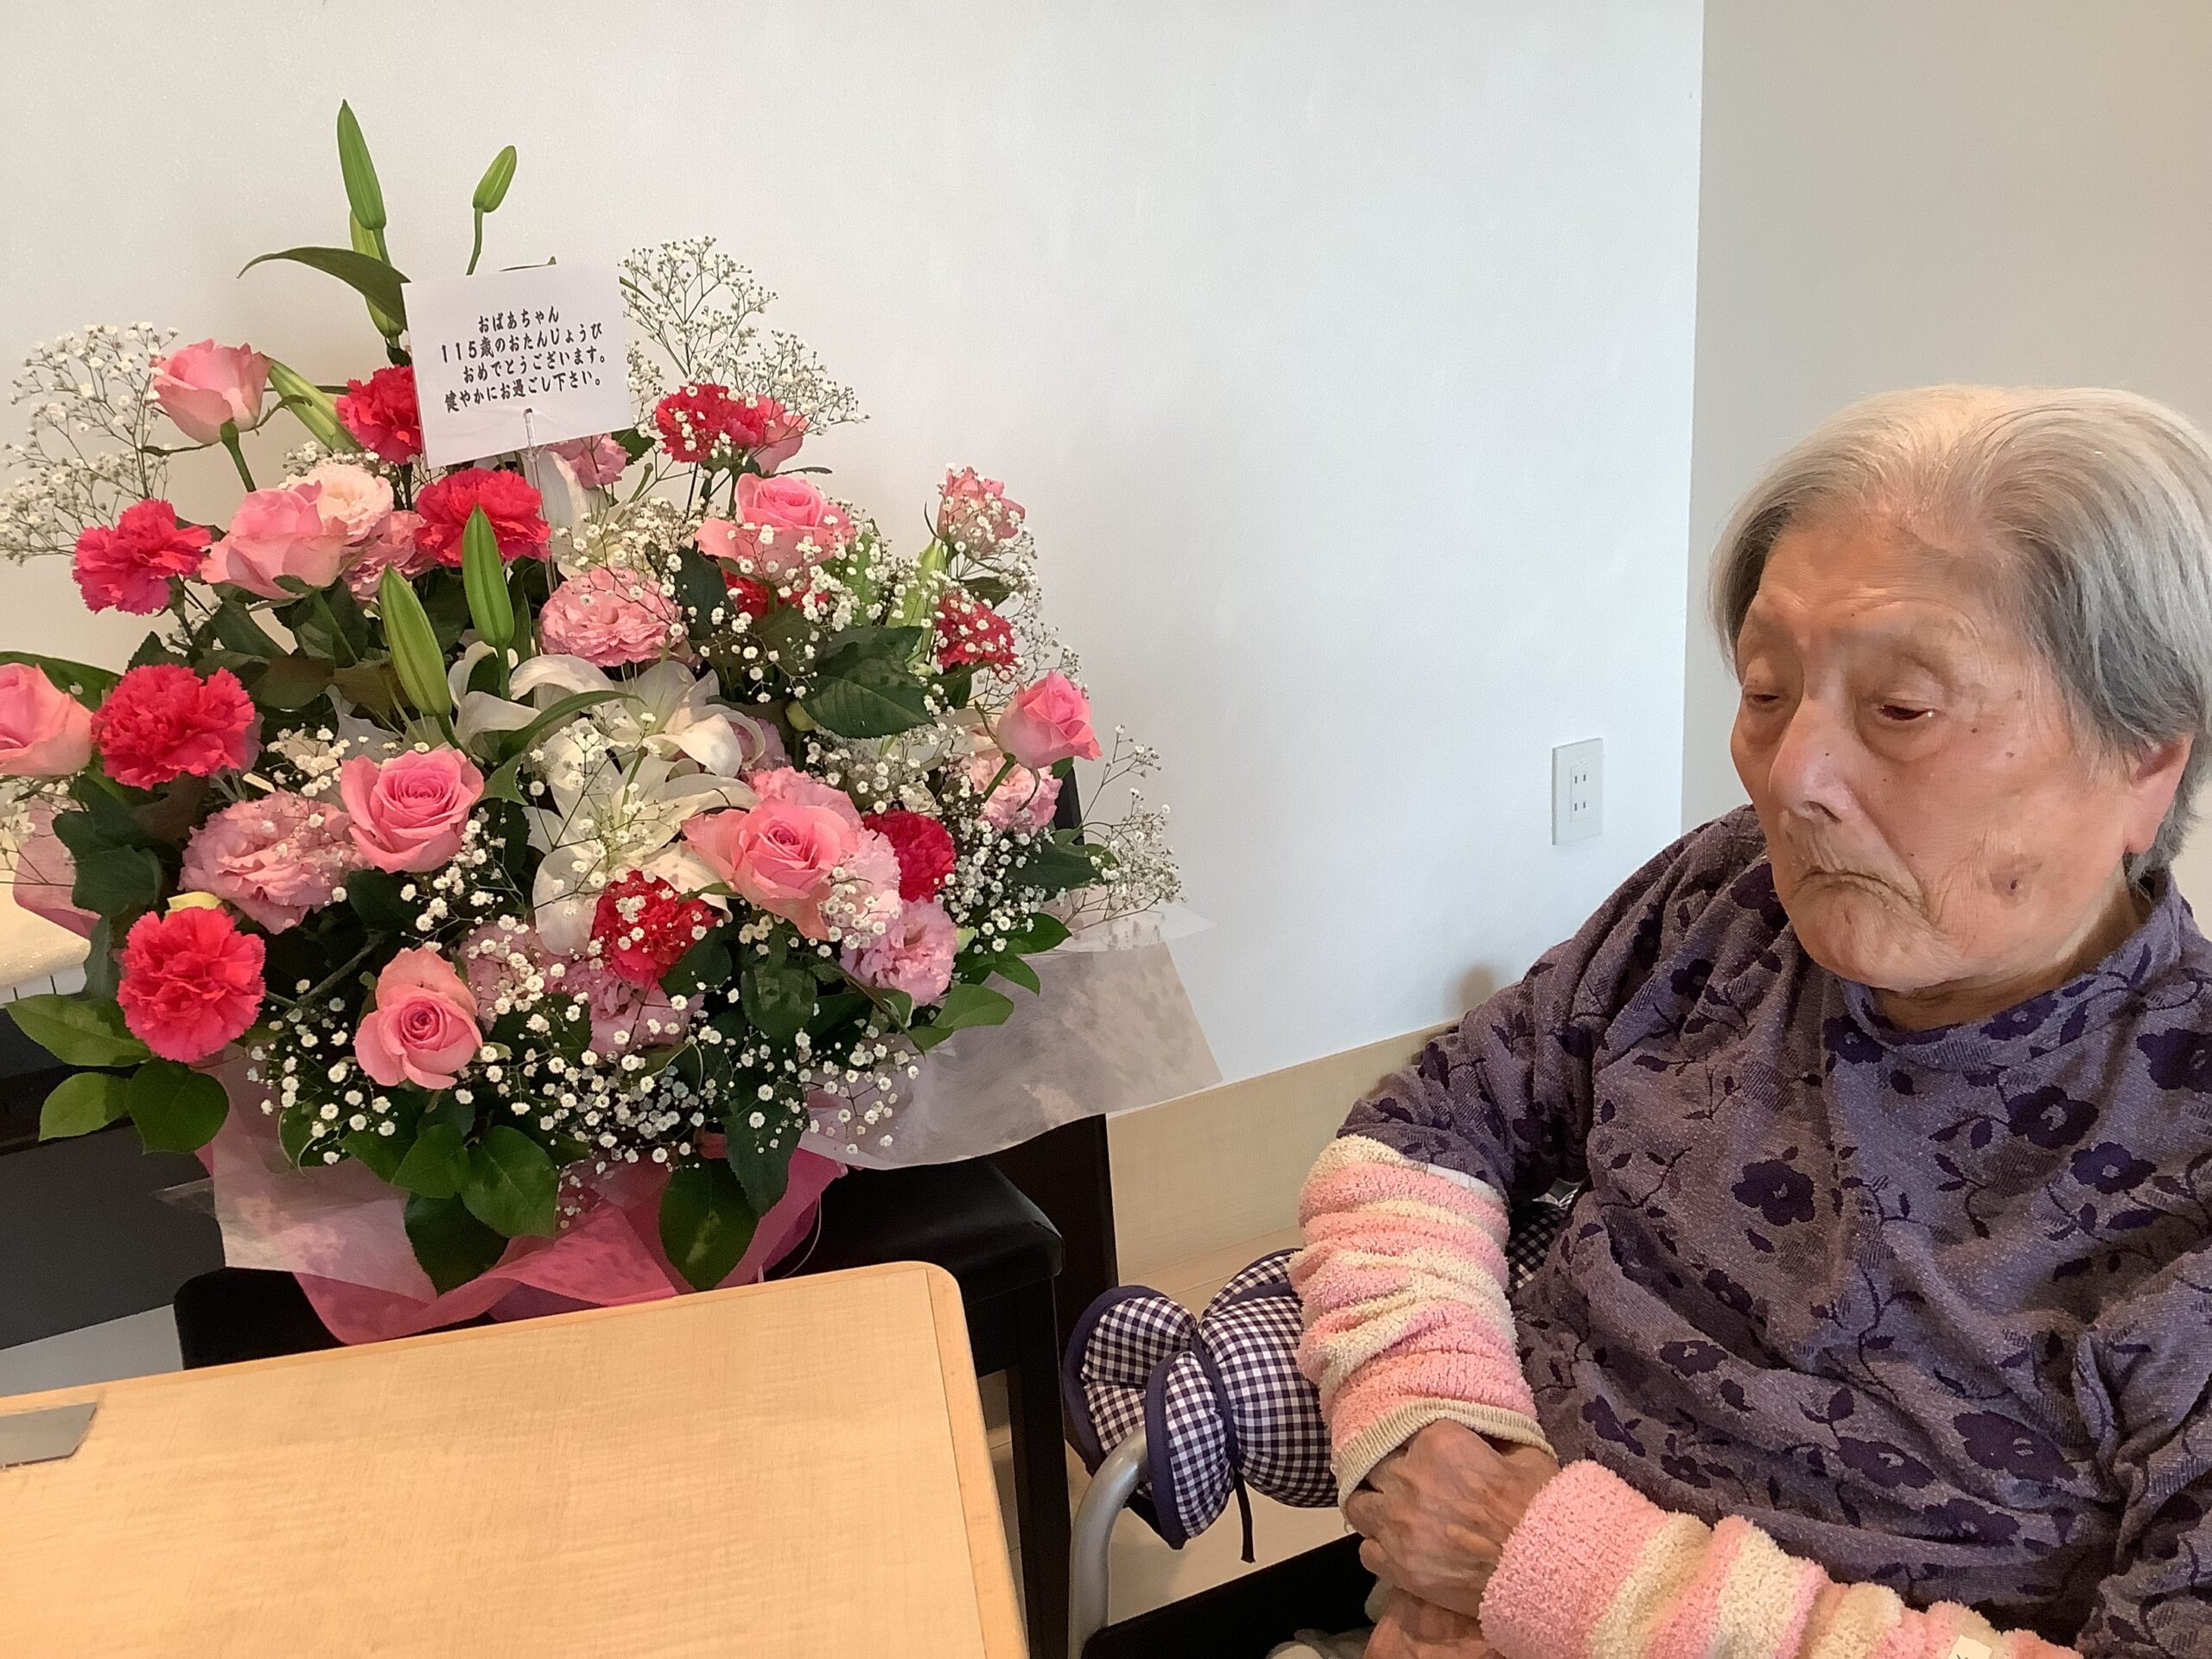 Congratulatory flowers and message from LongeviQuest (Source: chikusakai.jp)